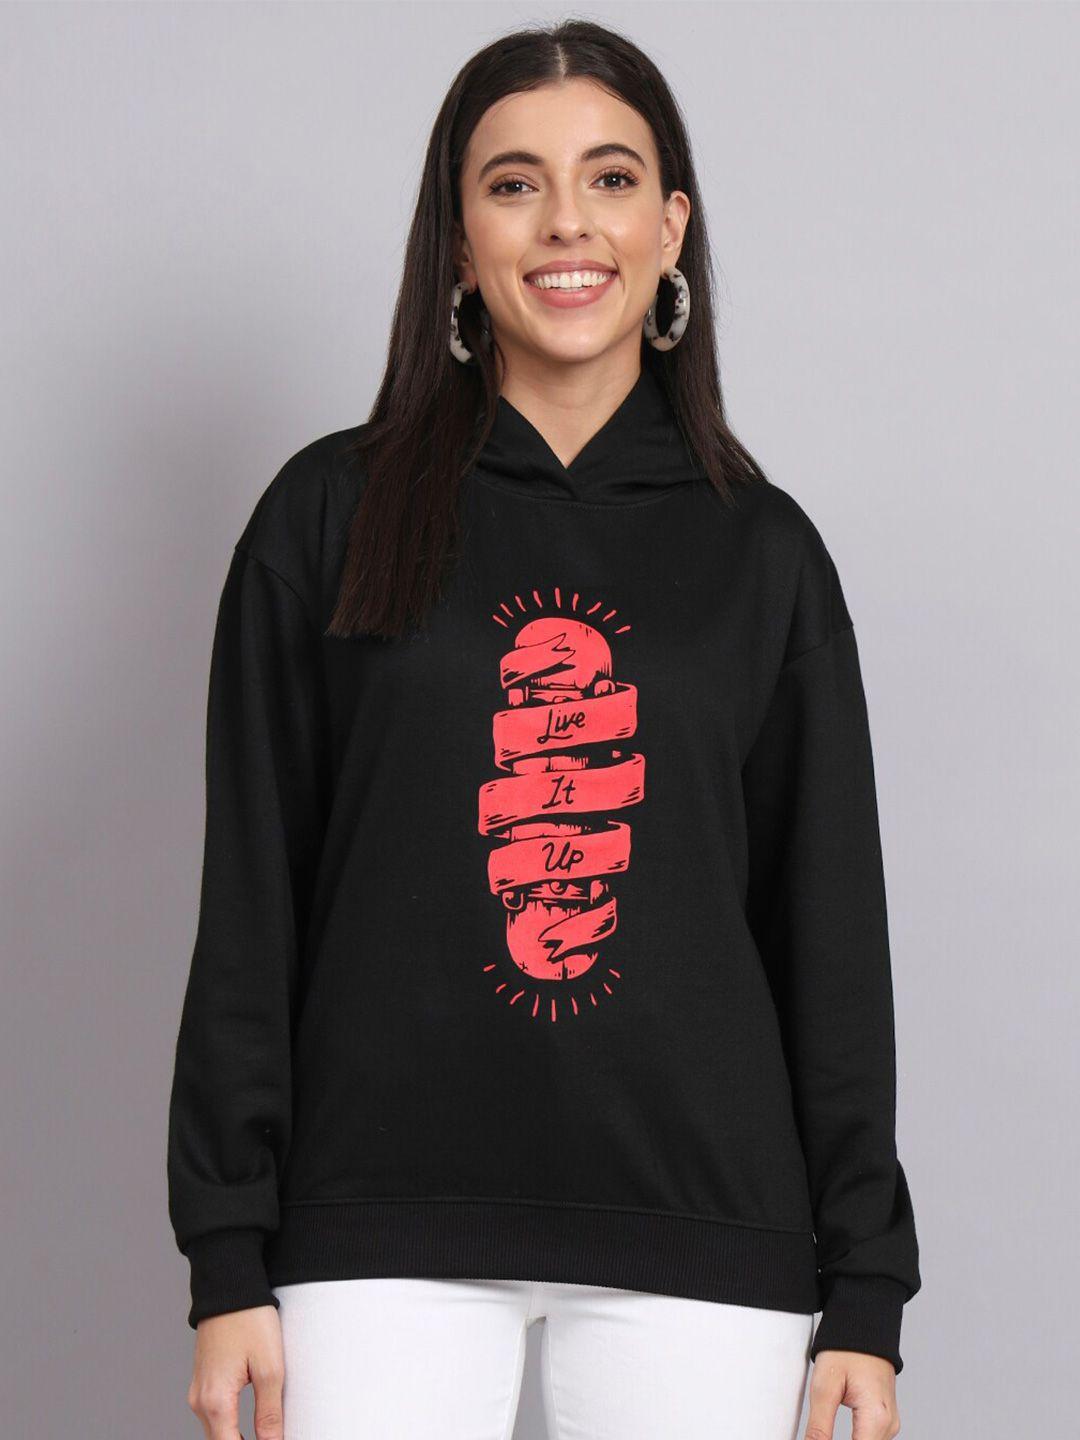 obaan graphic printed hooded cotton pullover sweatshirt